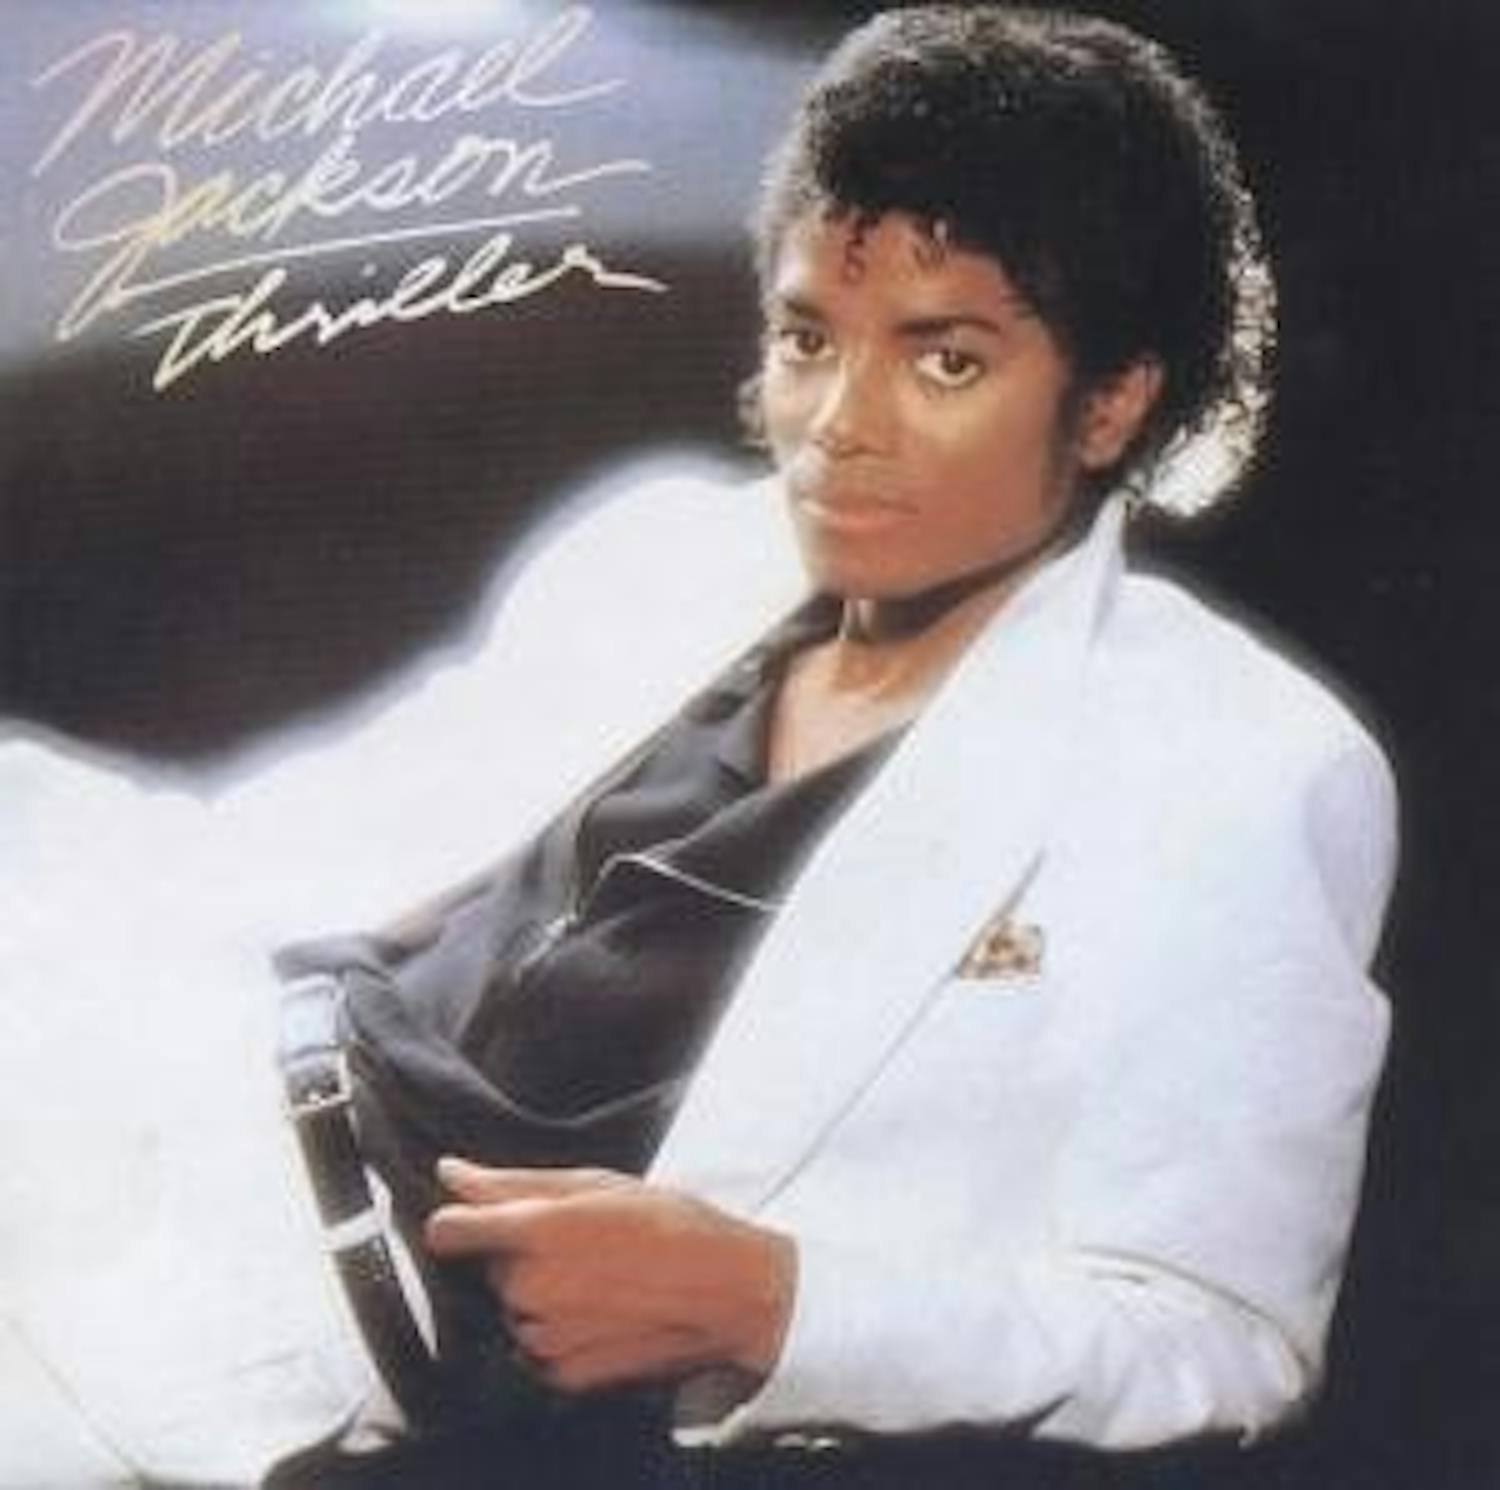 Michael Jackson, "Thriller."